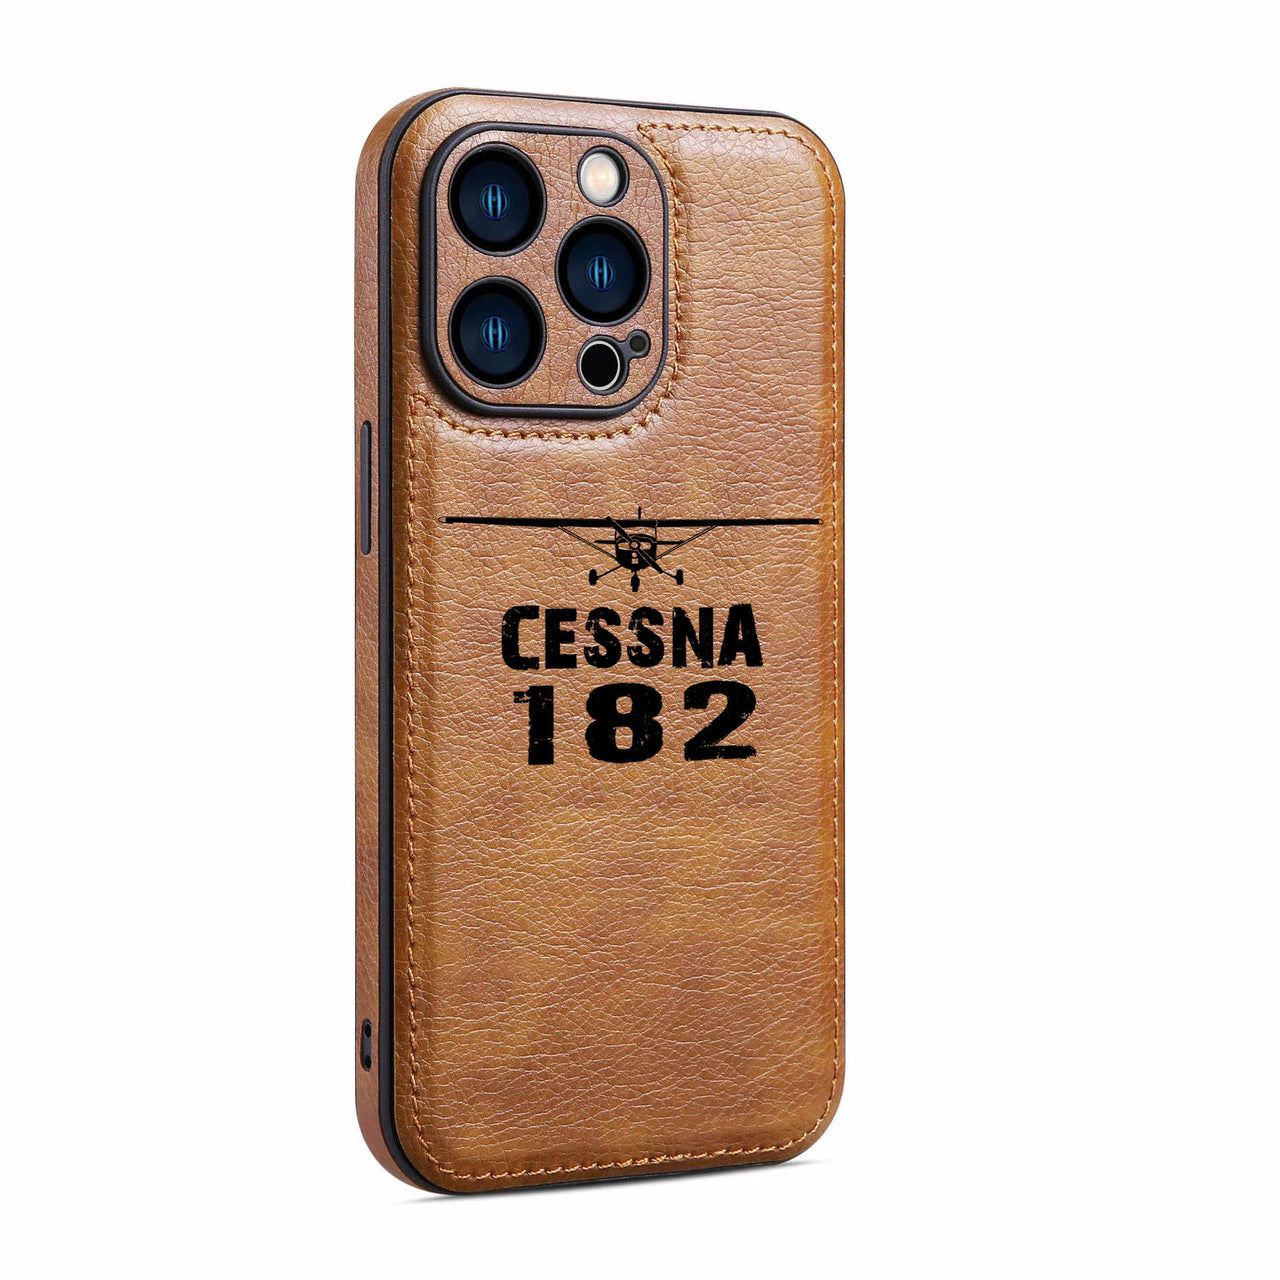 Cessna 182 & Plane Designed Leather iPhone Cases